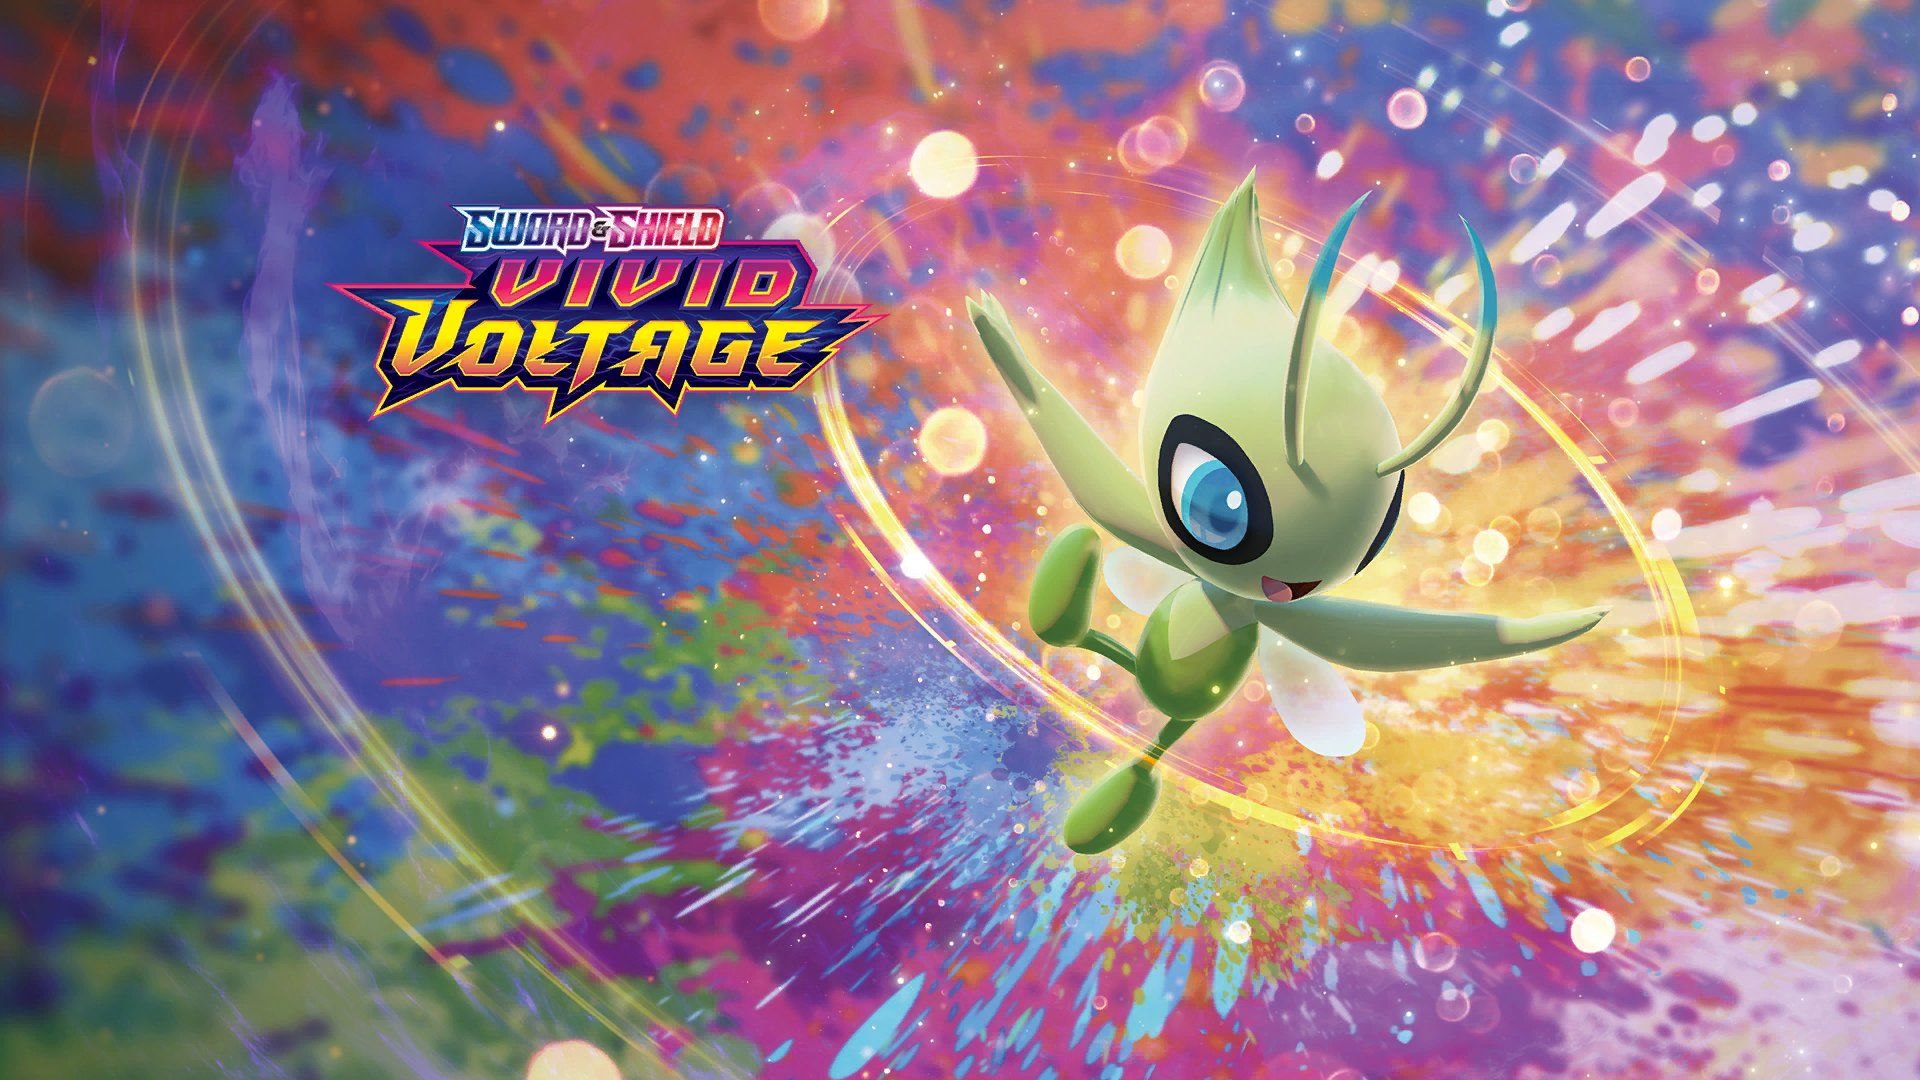 Pokémon TCG: Sword & Shield—Vivid Voltage features Celebi, Zarude, Pikachu VMAX, Orbeetle VMAX, Coalossal VMAX and many more new cards. Pokémon Blog